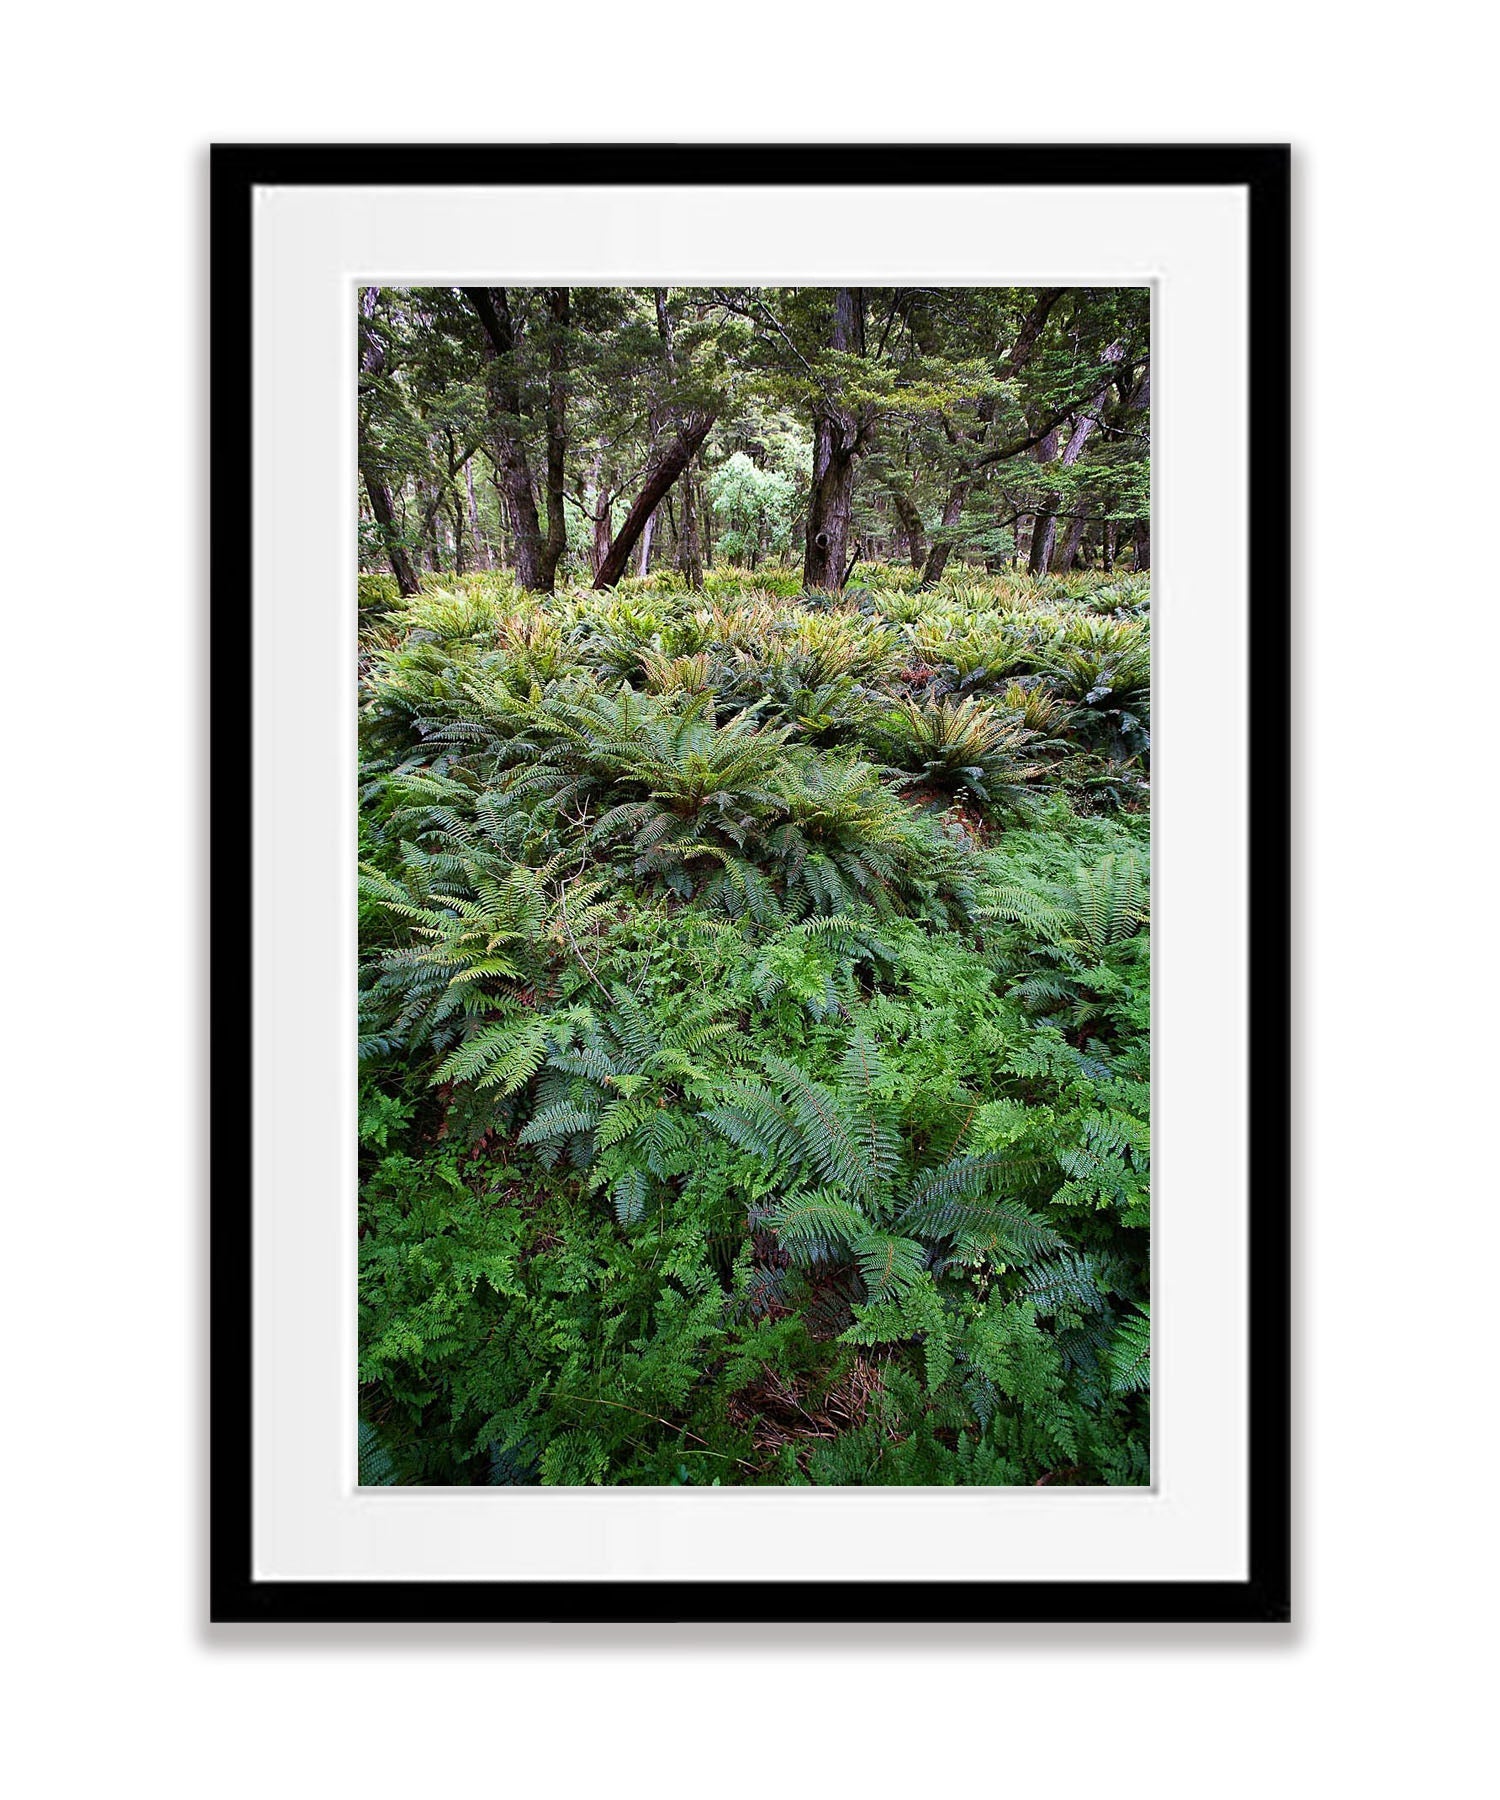 The Routeburn Rainforest, Routeburn Track - New Zealand